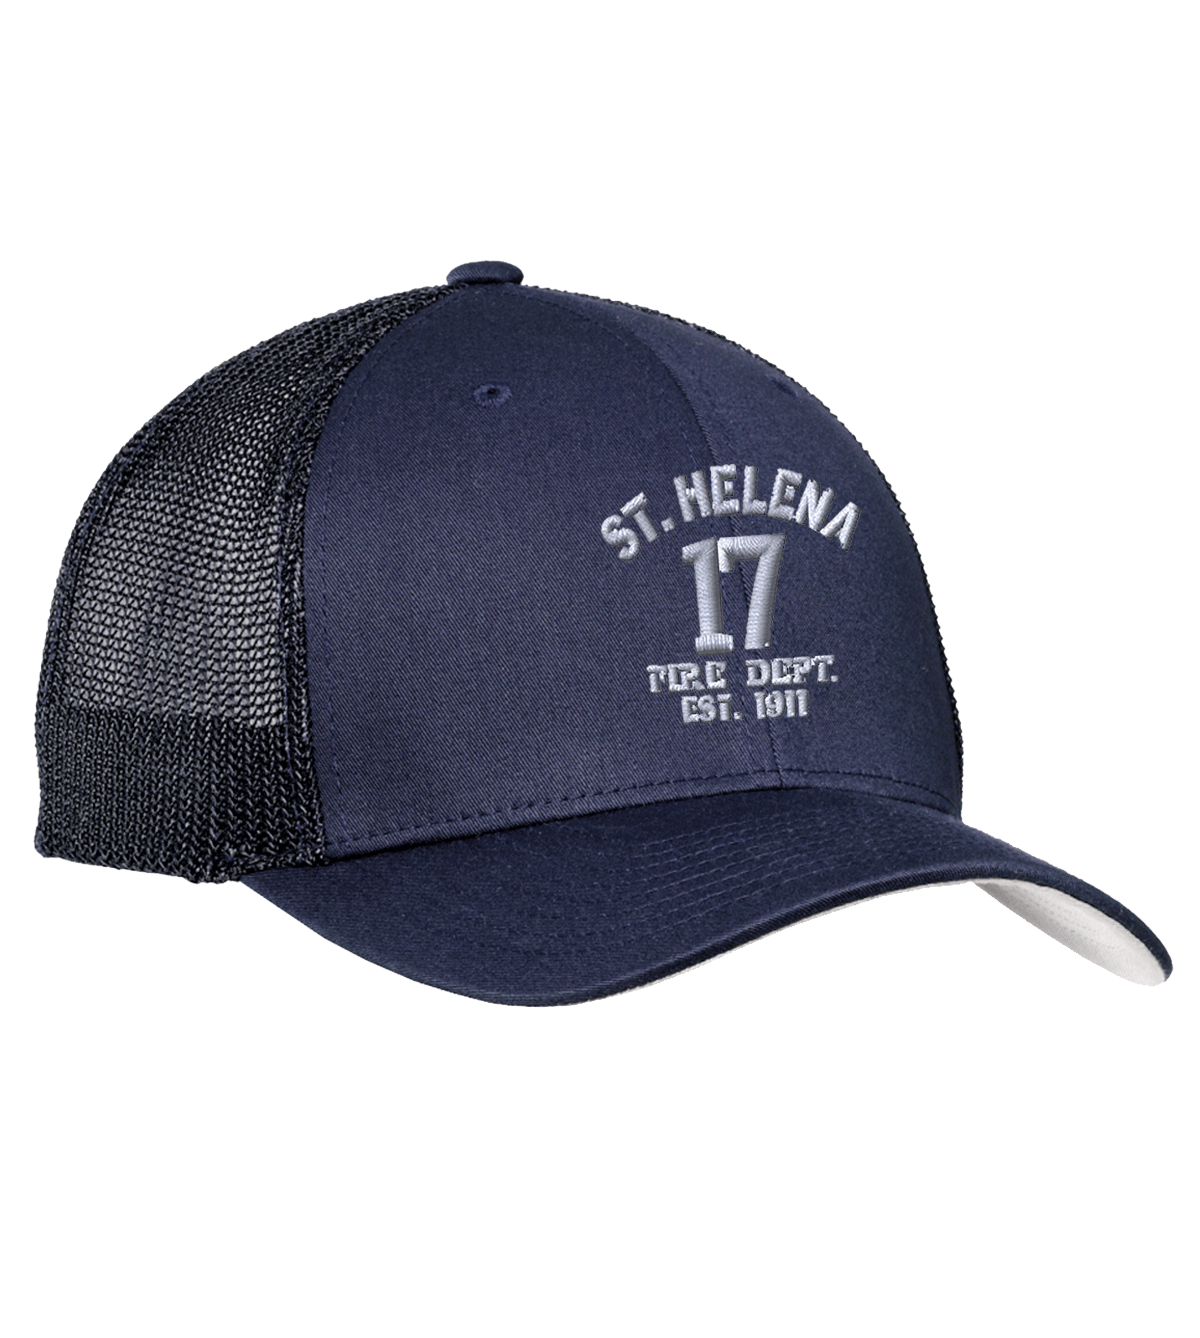 St. Helena Mesh Back Flexfit Cap